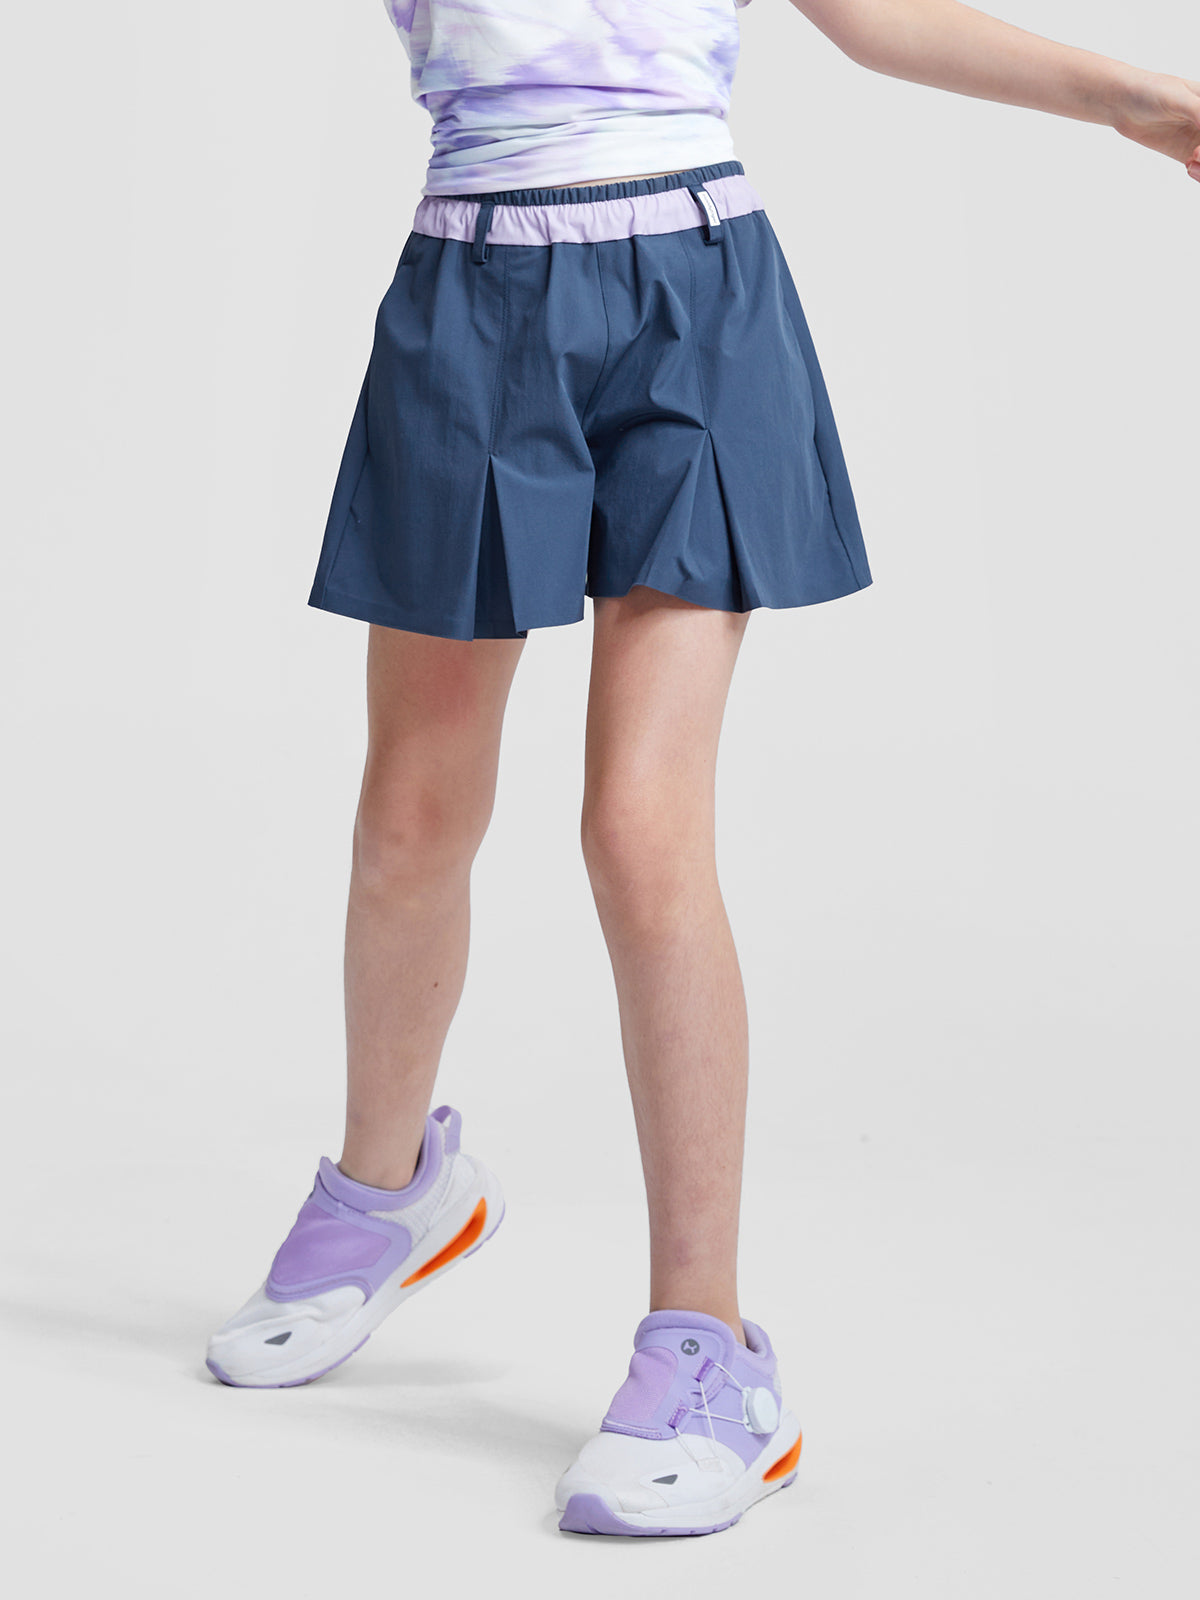 Tennis Pleated Skirt for Tennis